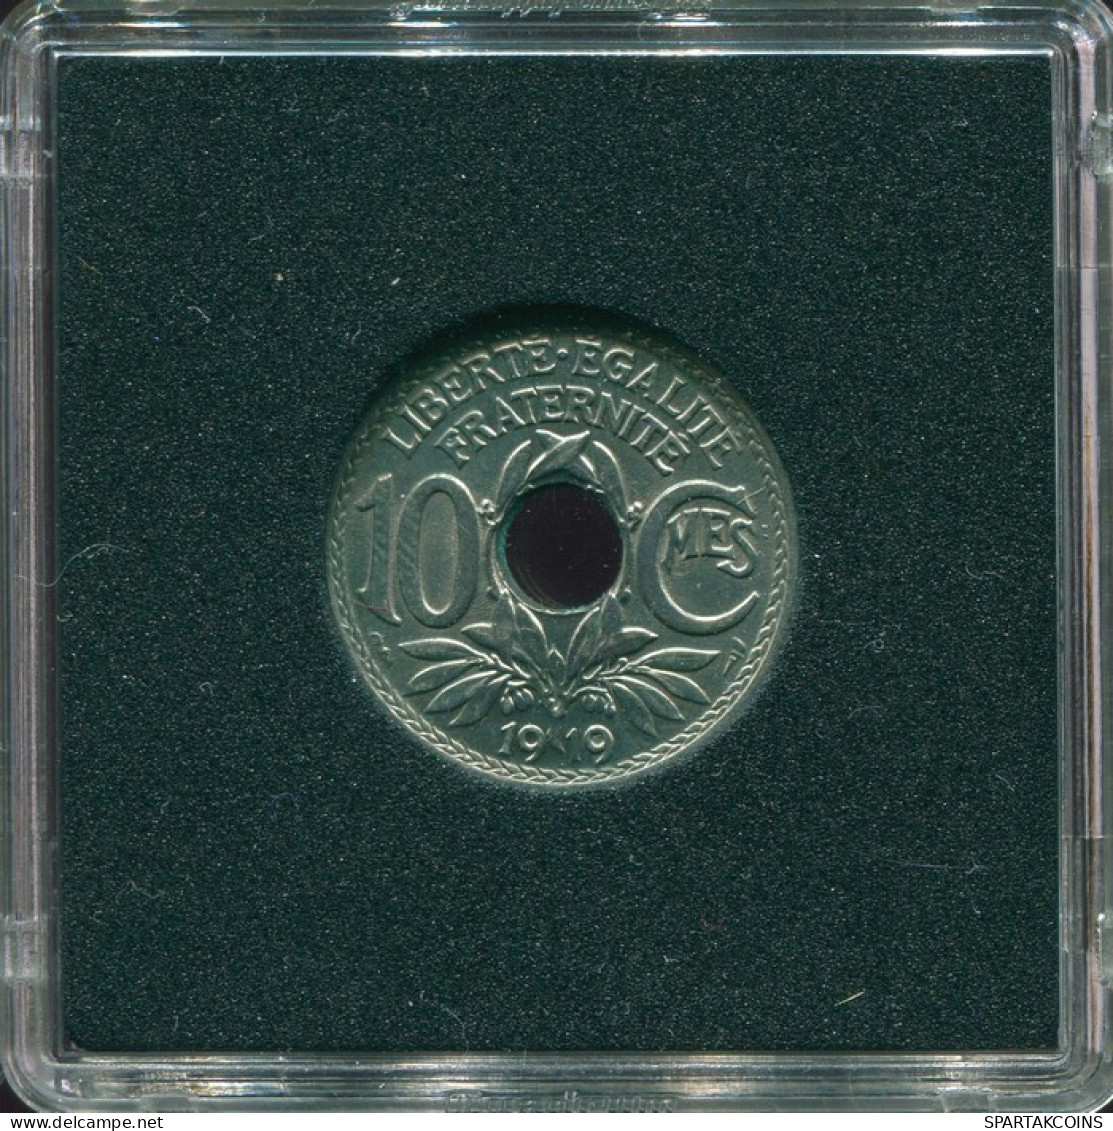 10 CENTIMES 1919 FRANKREICH FRANCE Französisch Münze UNC #FR1177.30.D.A - 10 Centimes